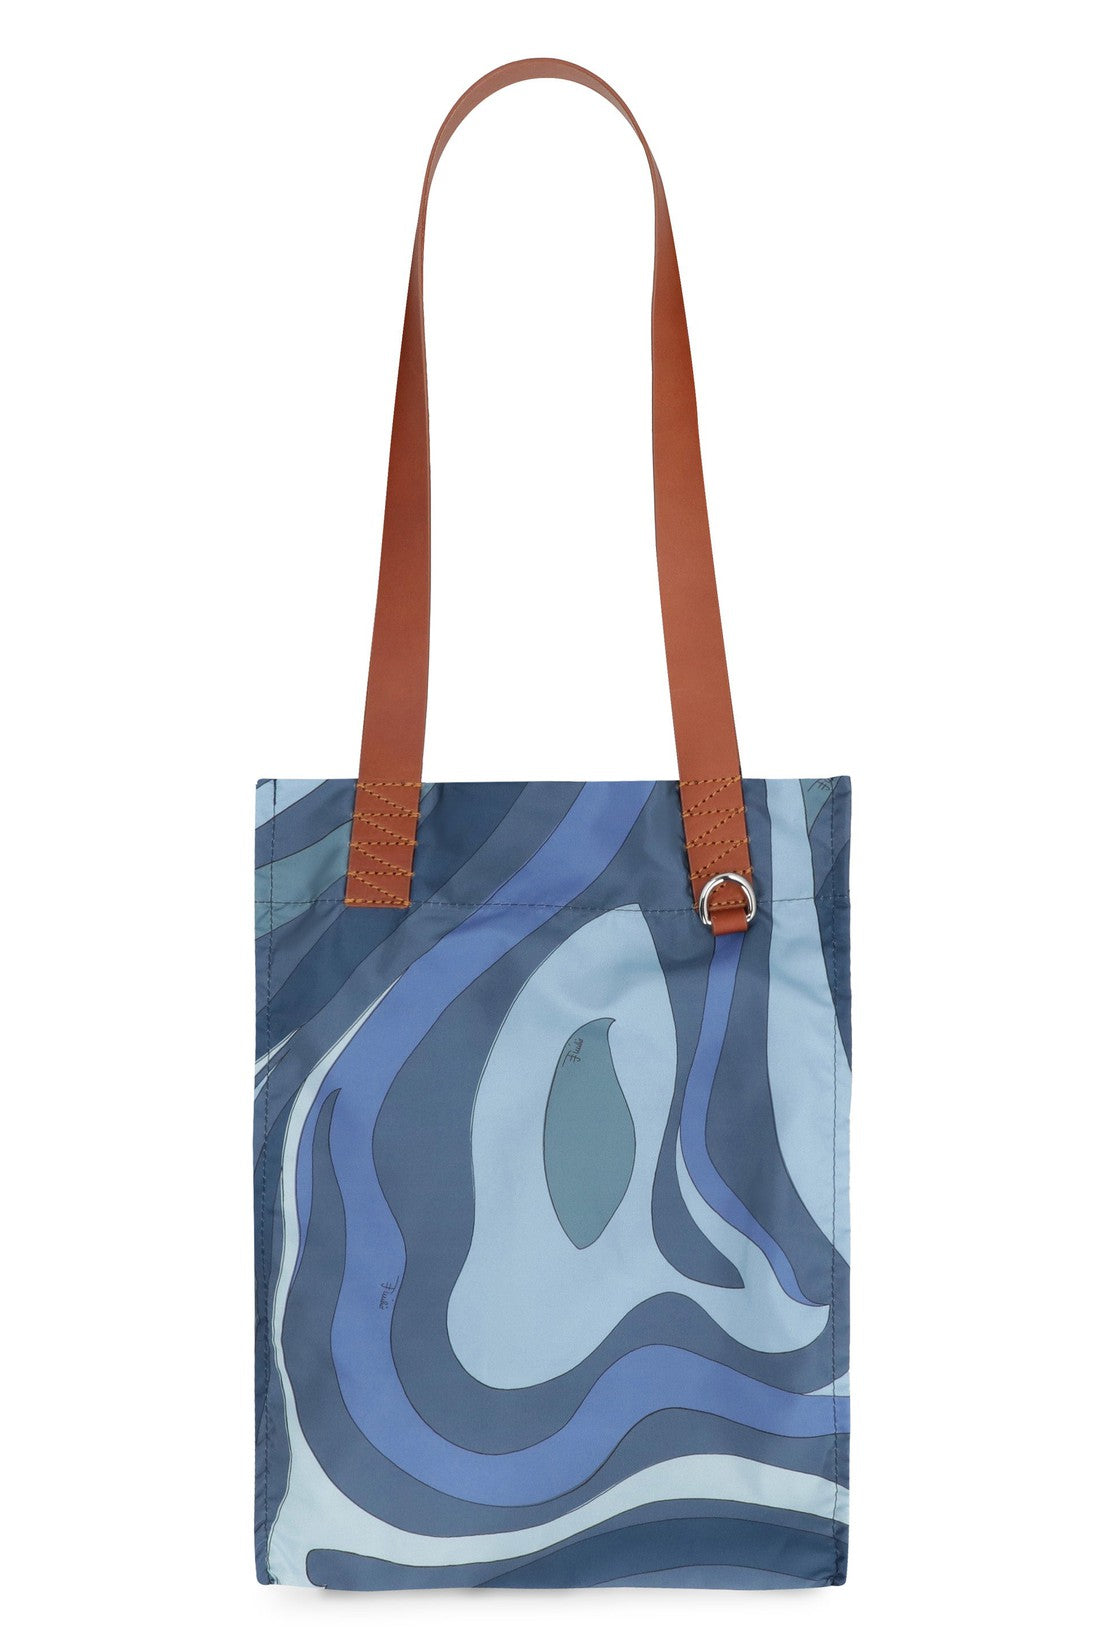 Emilio Pucci-OUTLET-SALE-Printed tote bag-ARCHIVIST